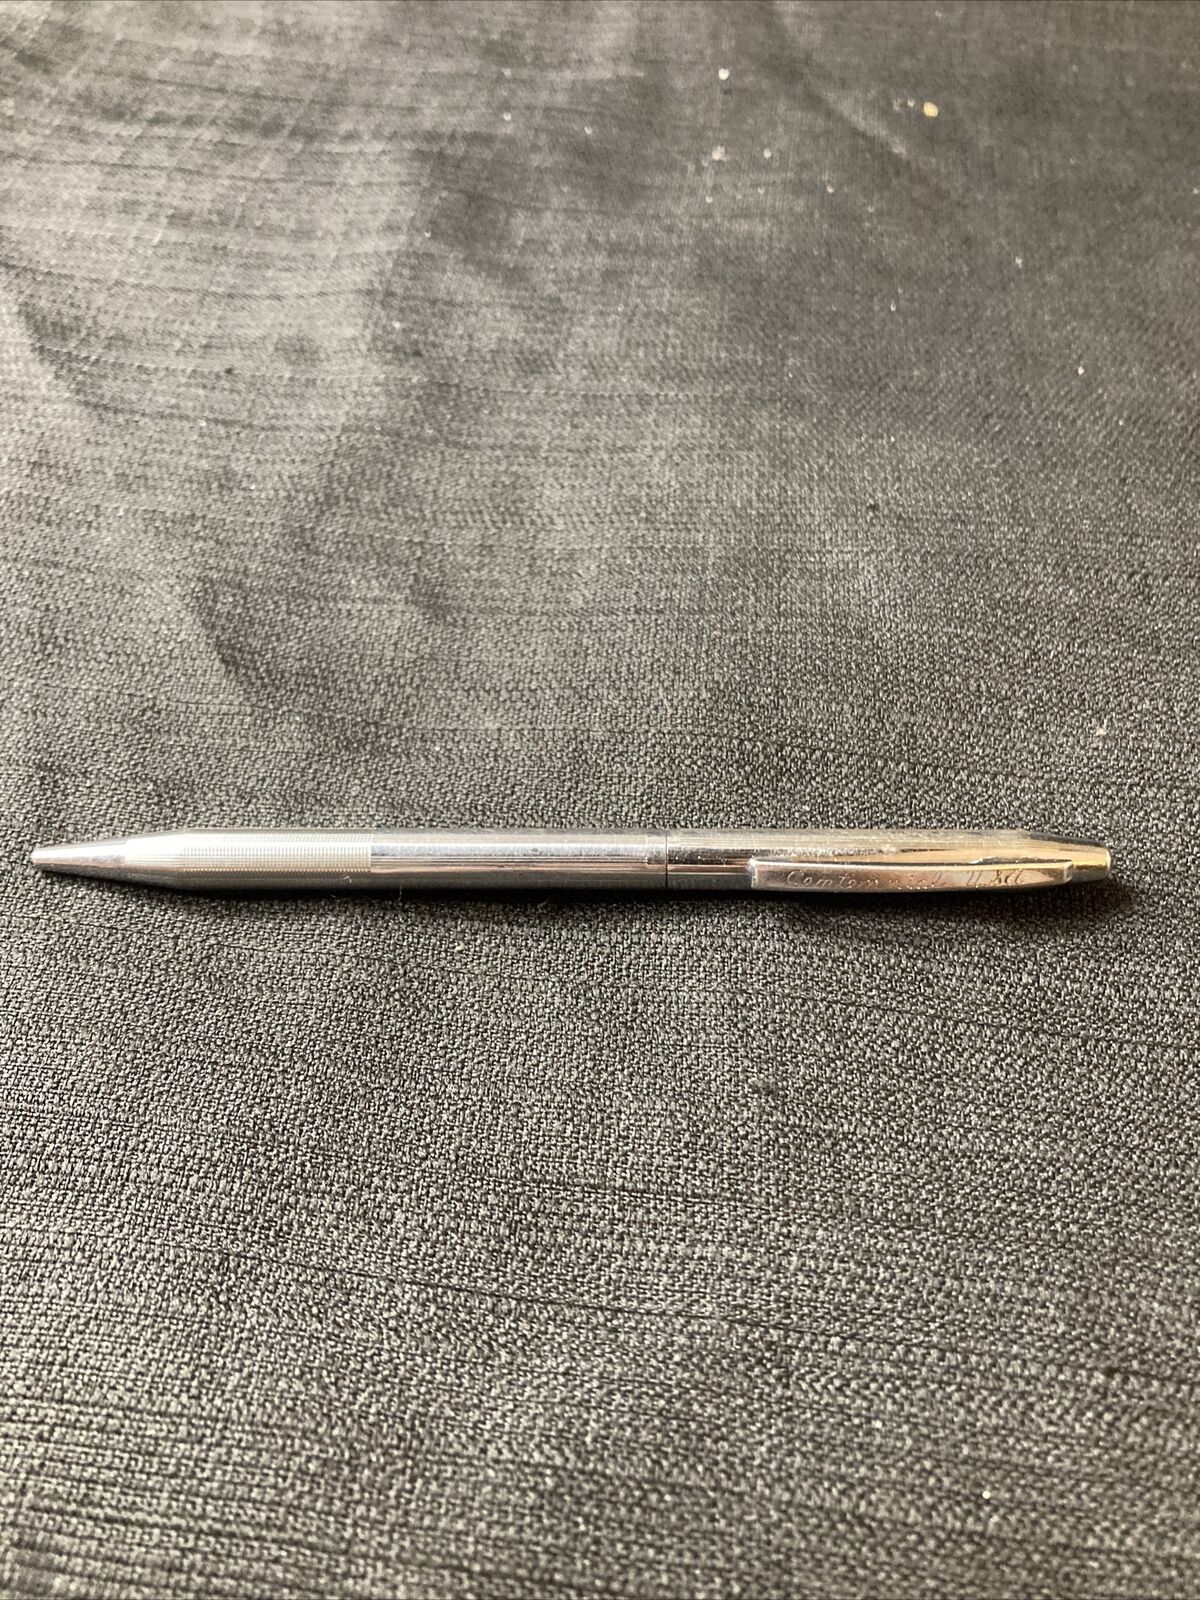 Vintage Centennial Aluminum USA Pen